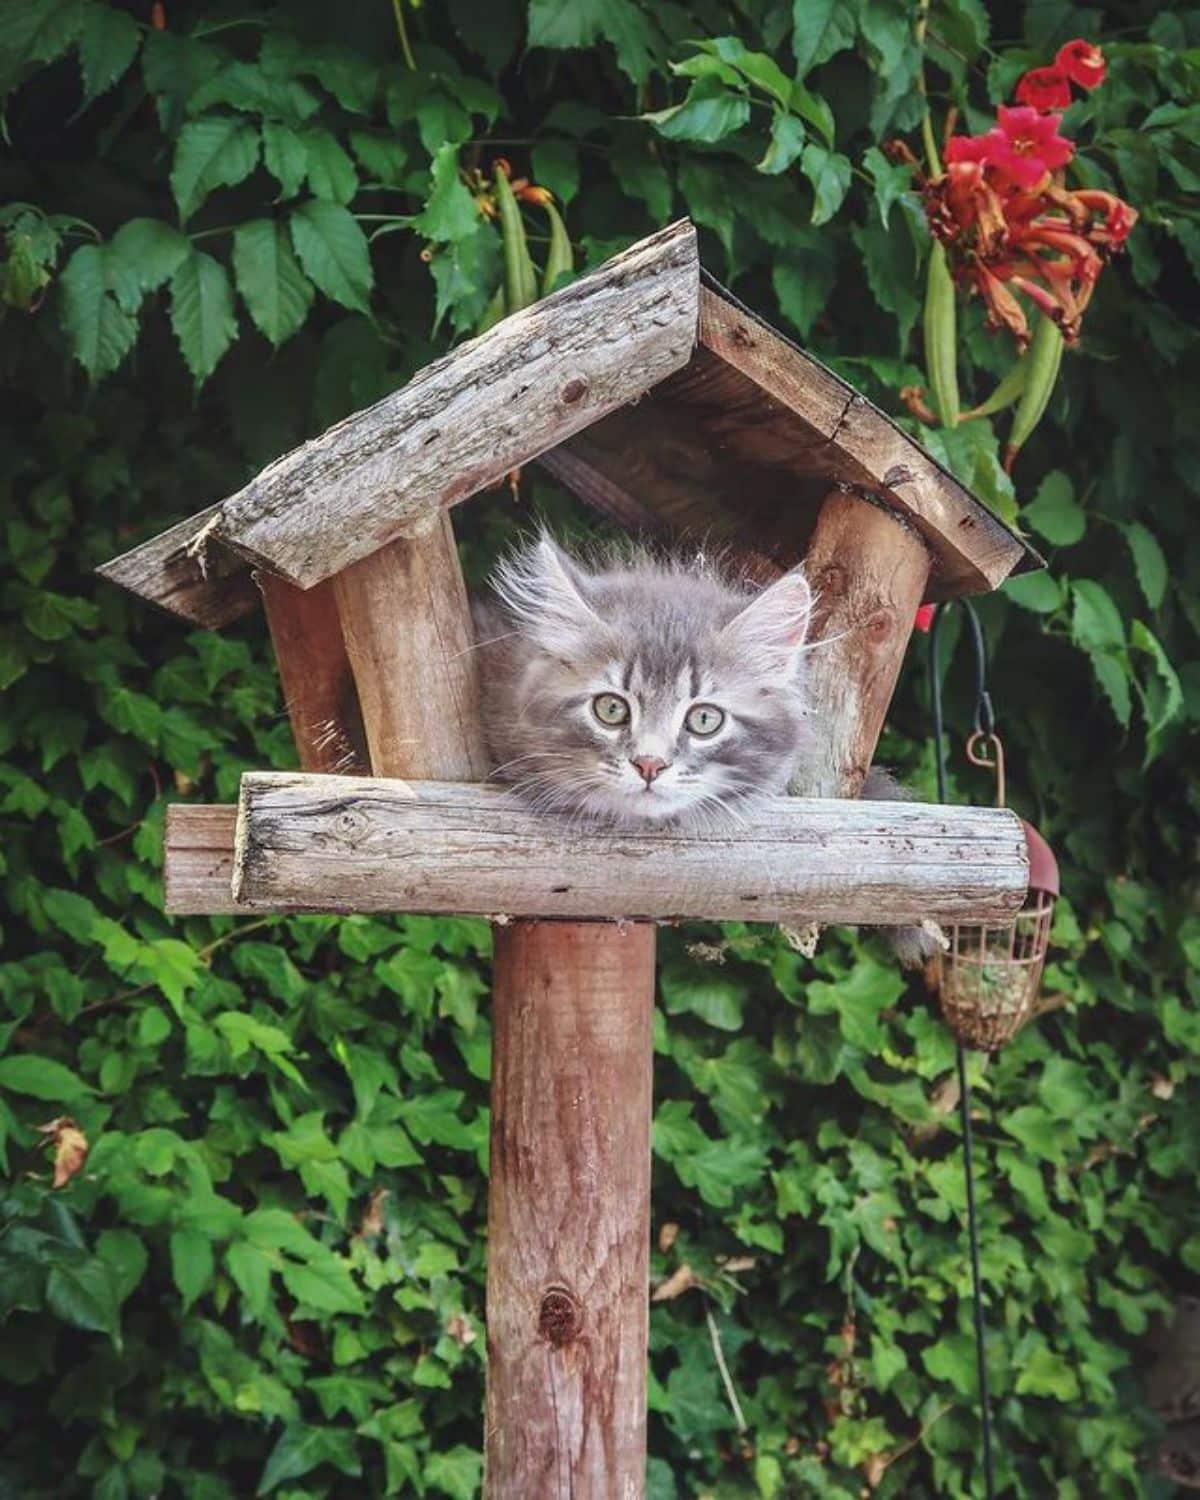 A cute gray maine coon kitten lying in a wooden bird house.